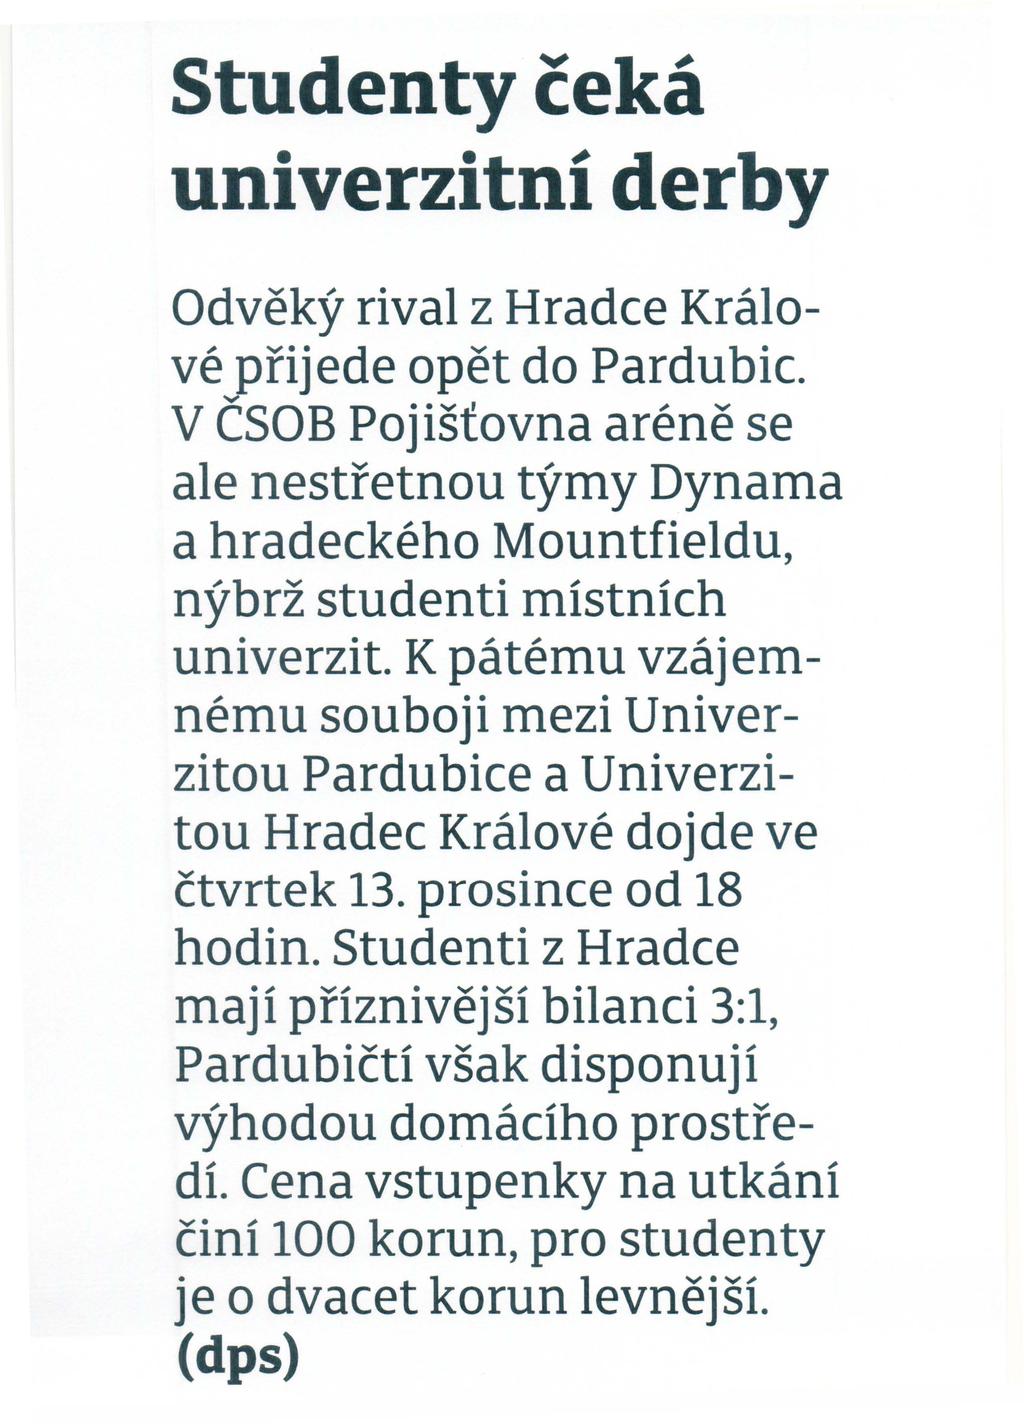 Studenty Ceka univerzitni derby Odveky rival z Hradce Kralove prijede opet do Pardubic.